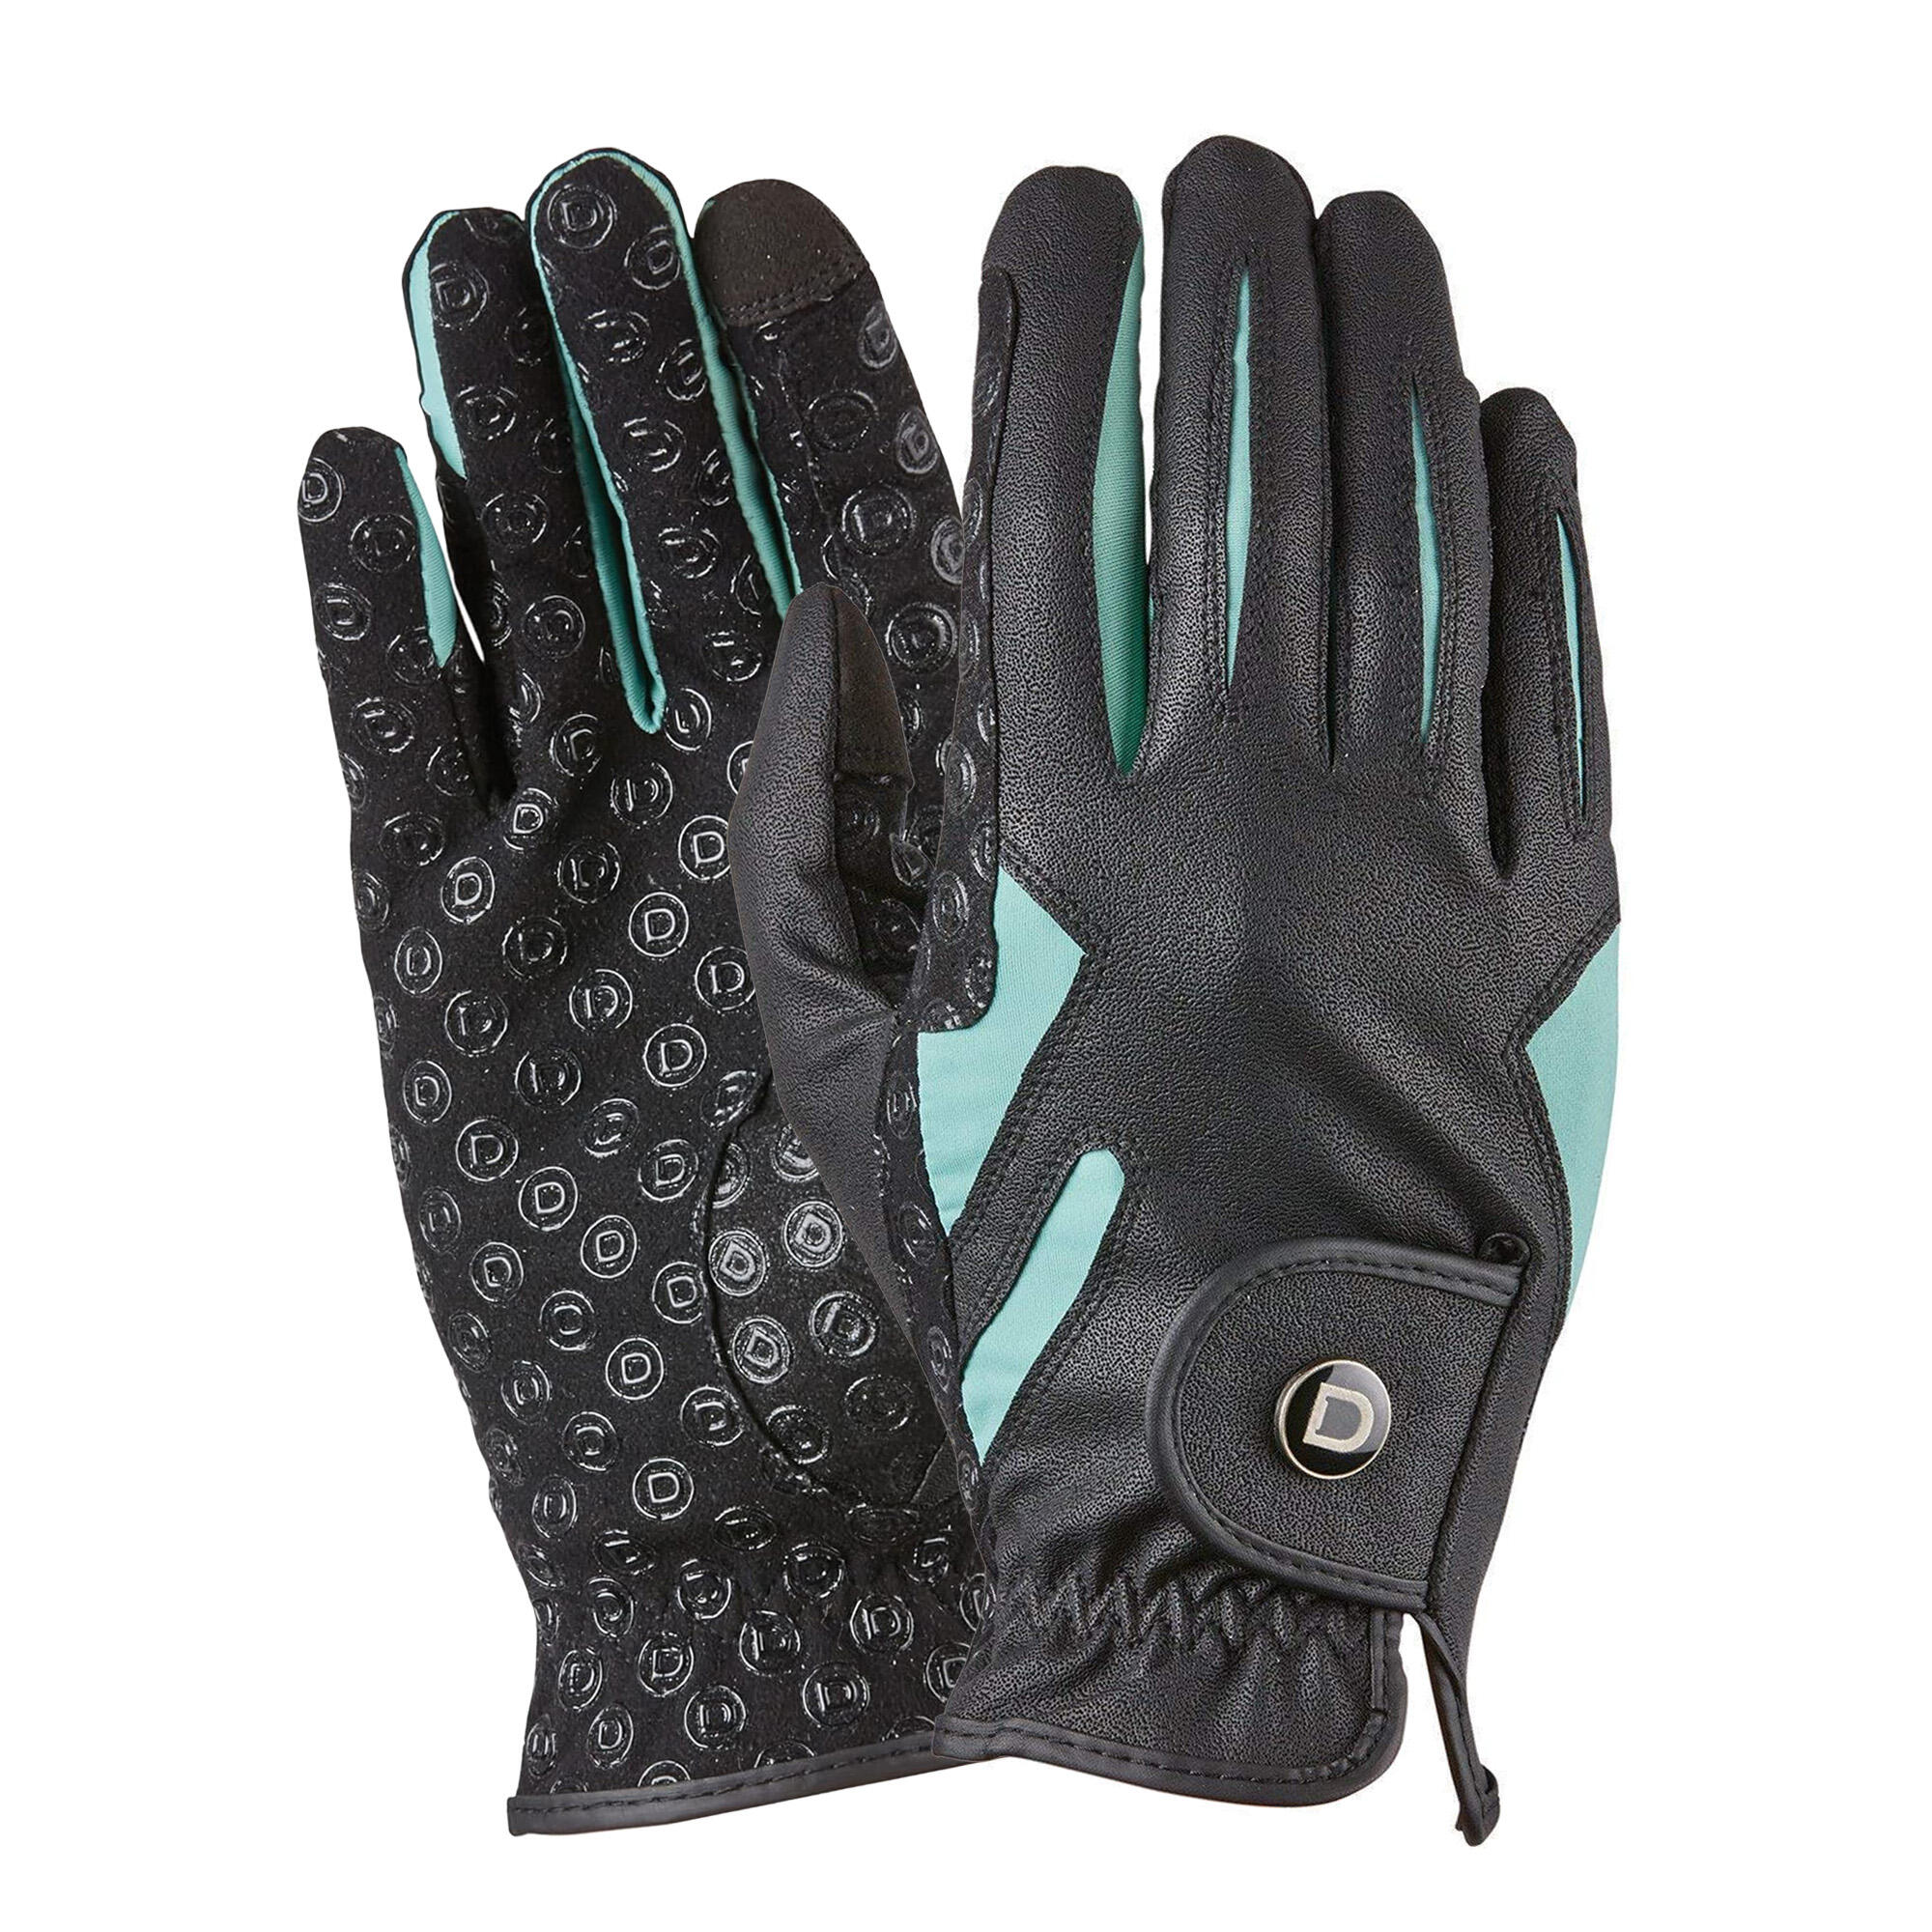 Unisex Coolit Gel Touch Fastening Riding Gloves (Black/Teal) 3/4